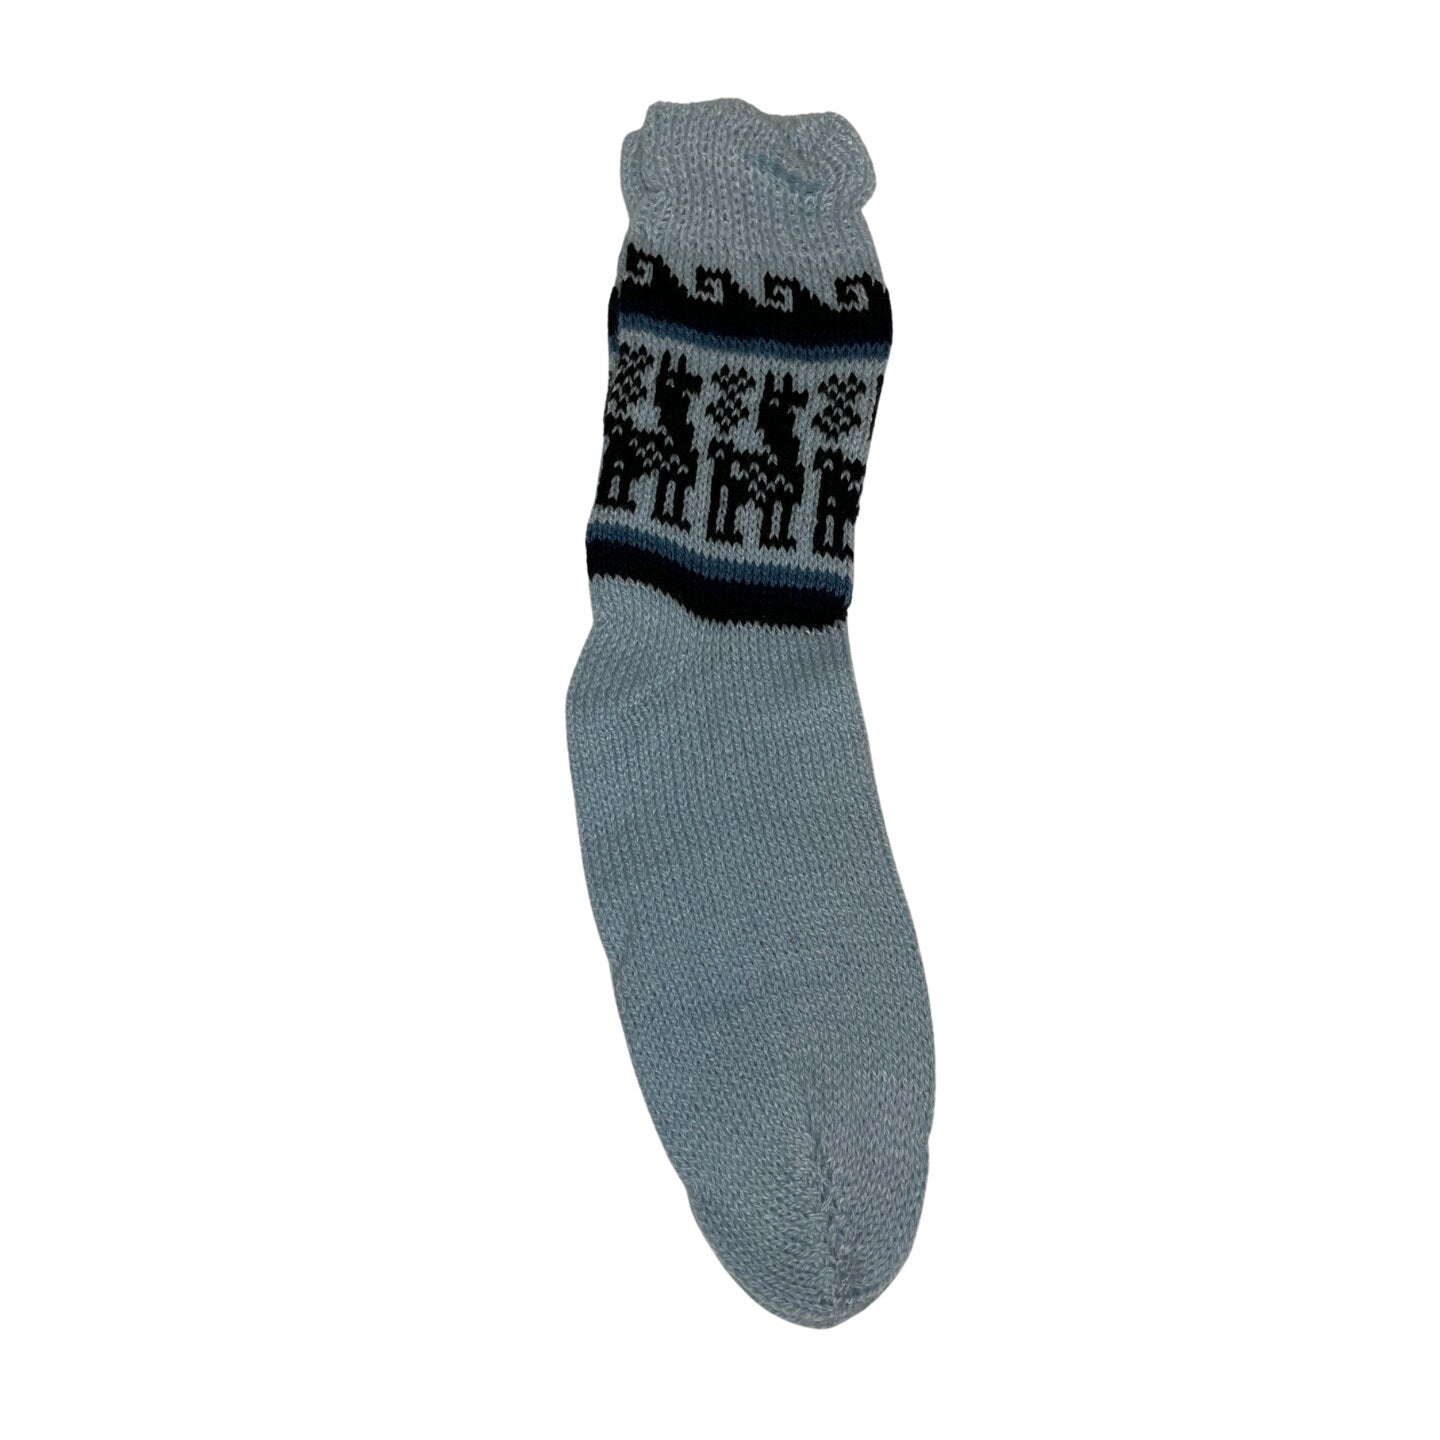 Winter Knitted Alpaca Mid Calf Socks | Size 9-10 US Adult Socks